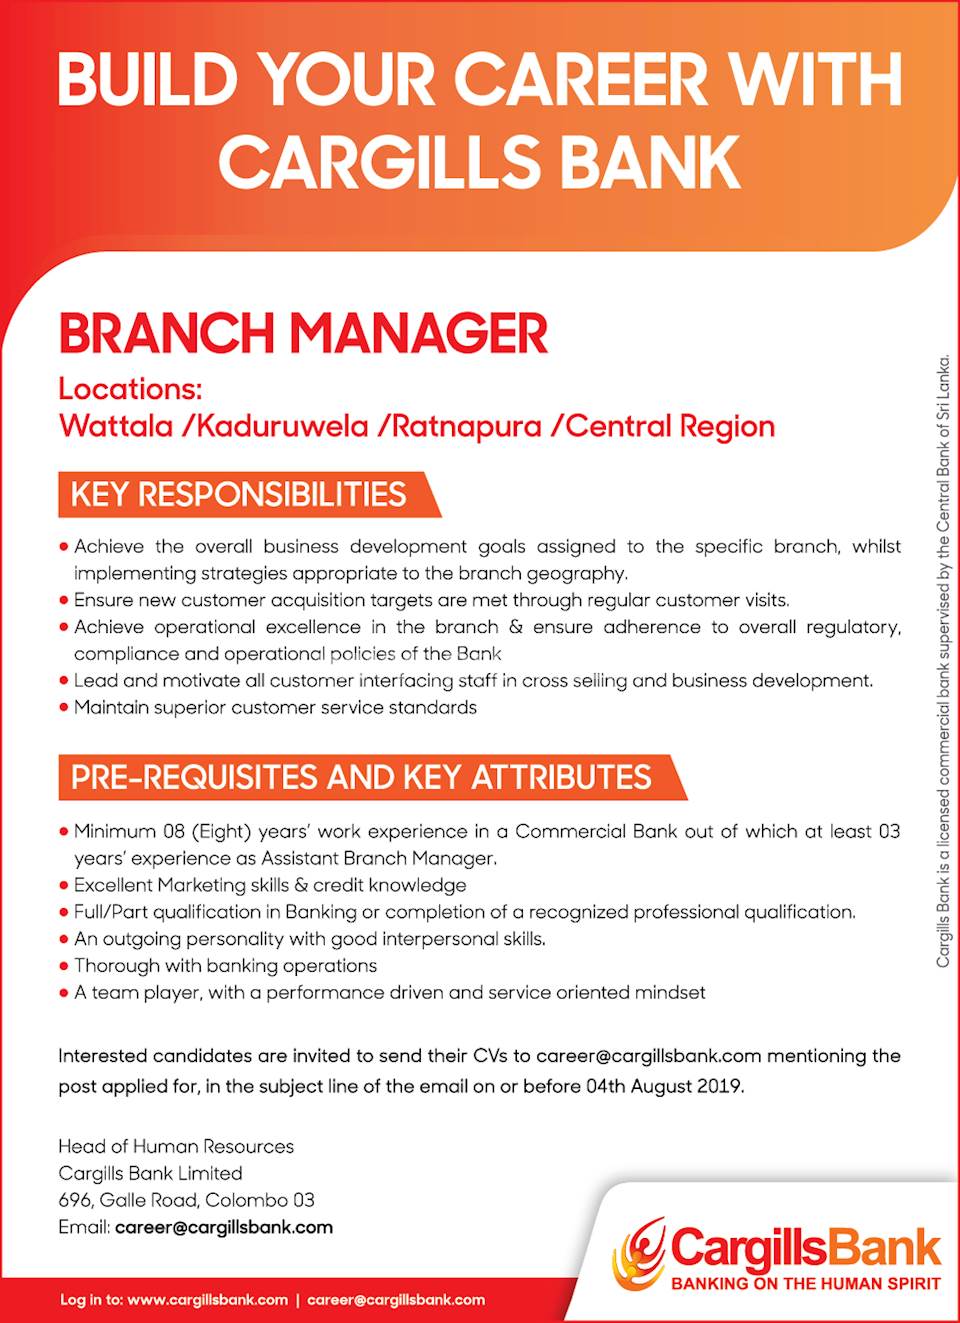 Branch Manager - Wattala/Kaduruwela/Ratnapura/Central Region